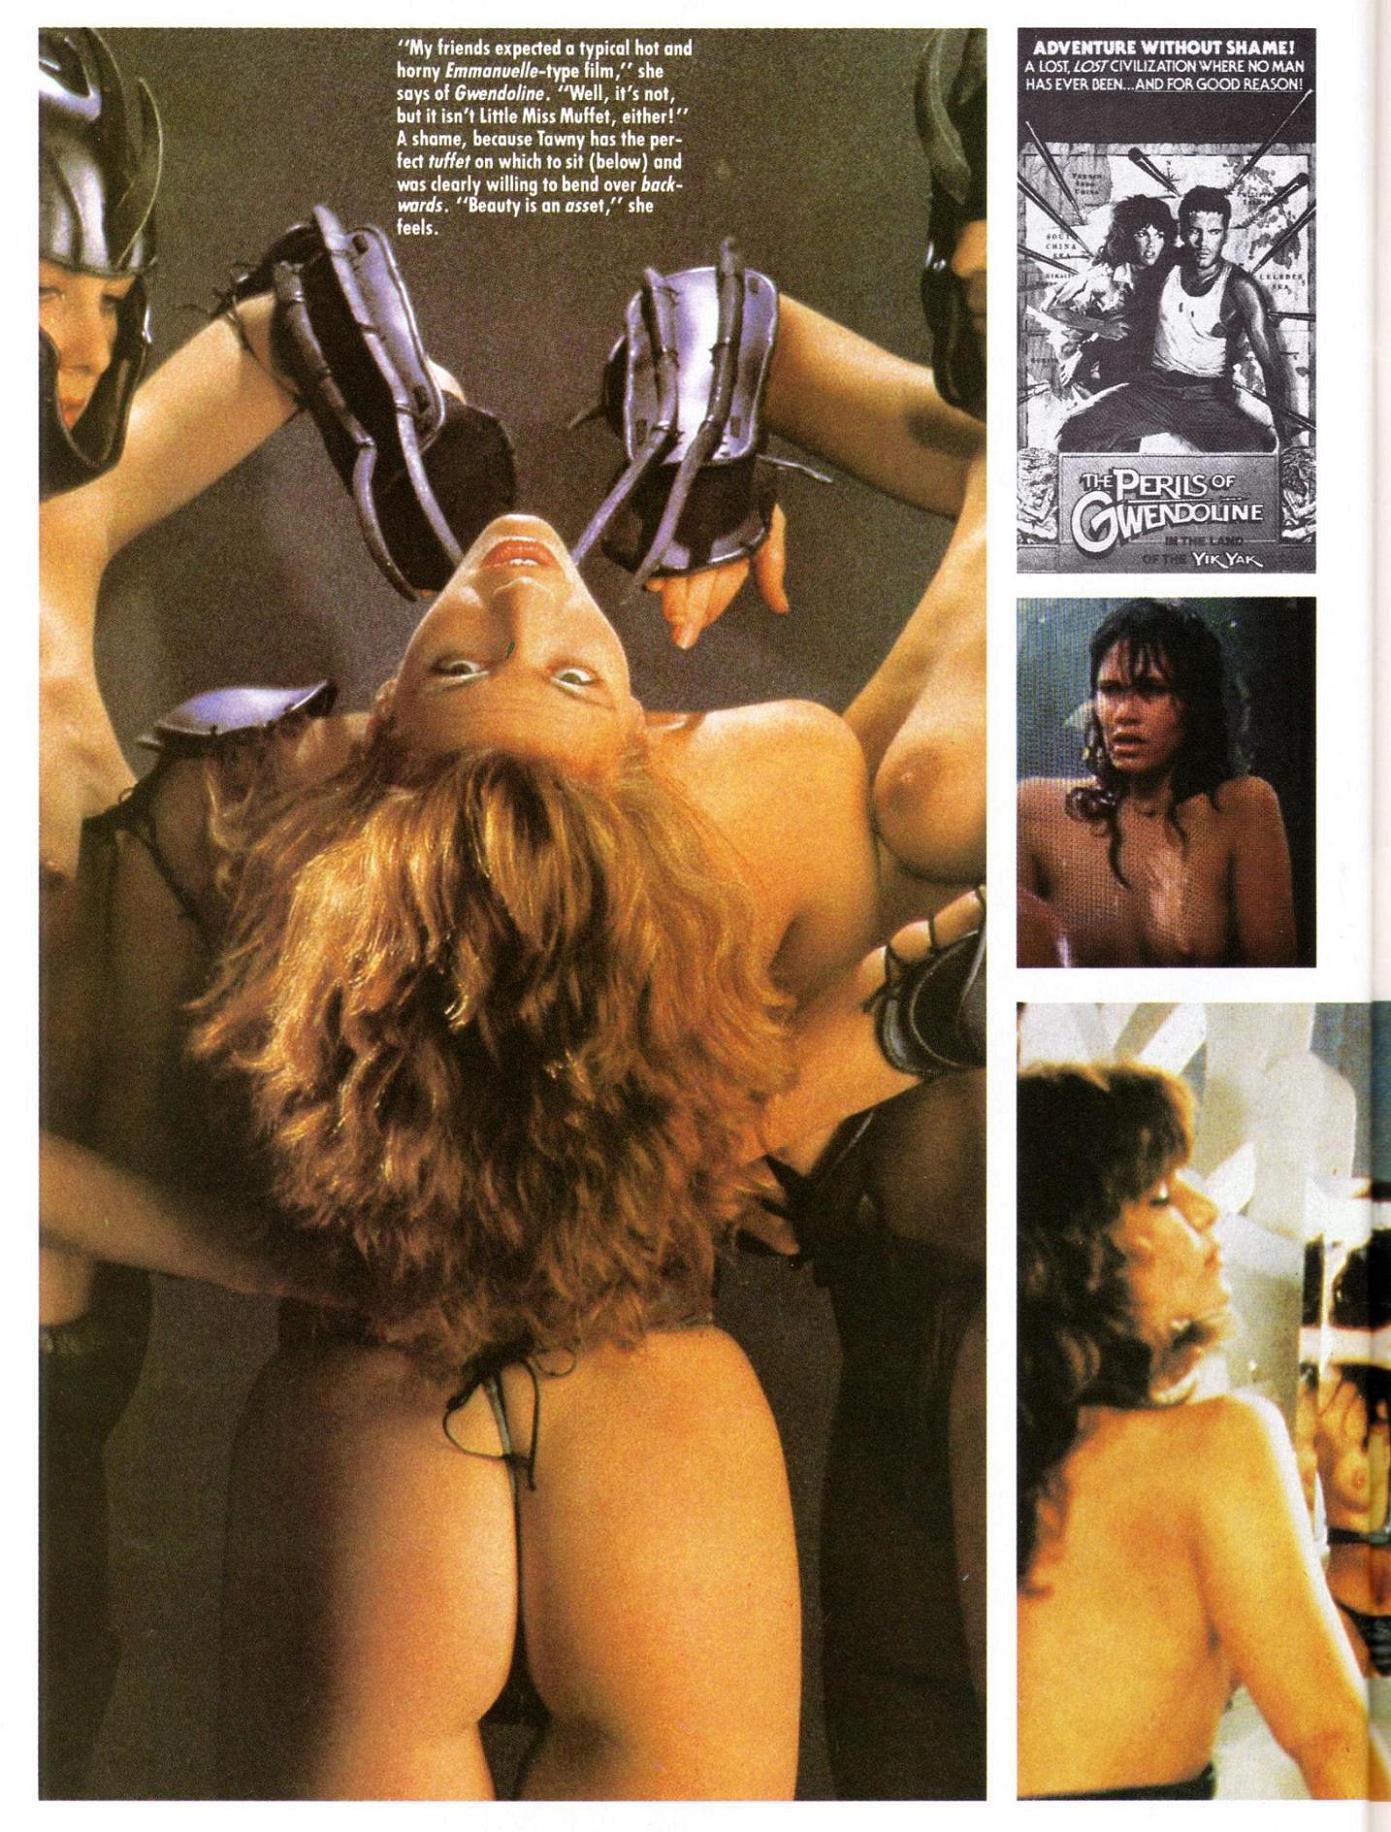 Tawny Kitaen nude, naked, голая, обнаженная Тони Китэйн / Тоуни Китэн - Обнаженные знаменитости